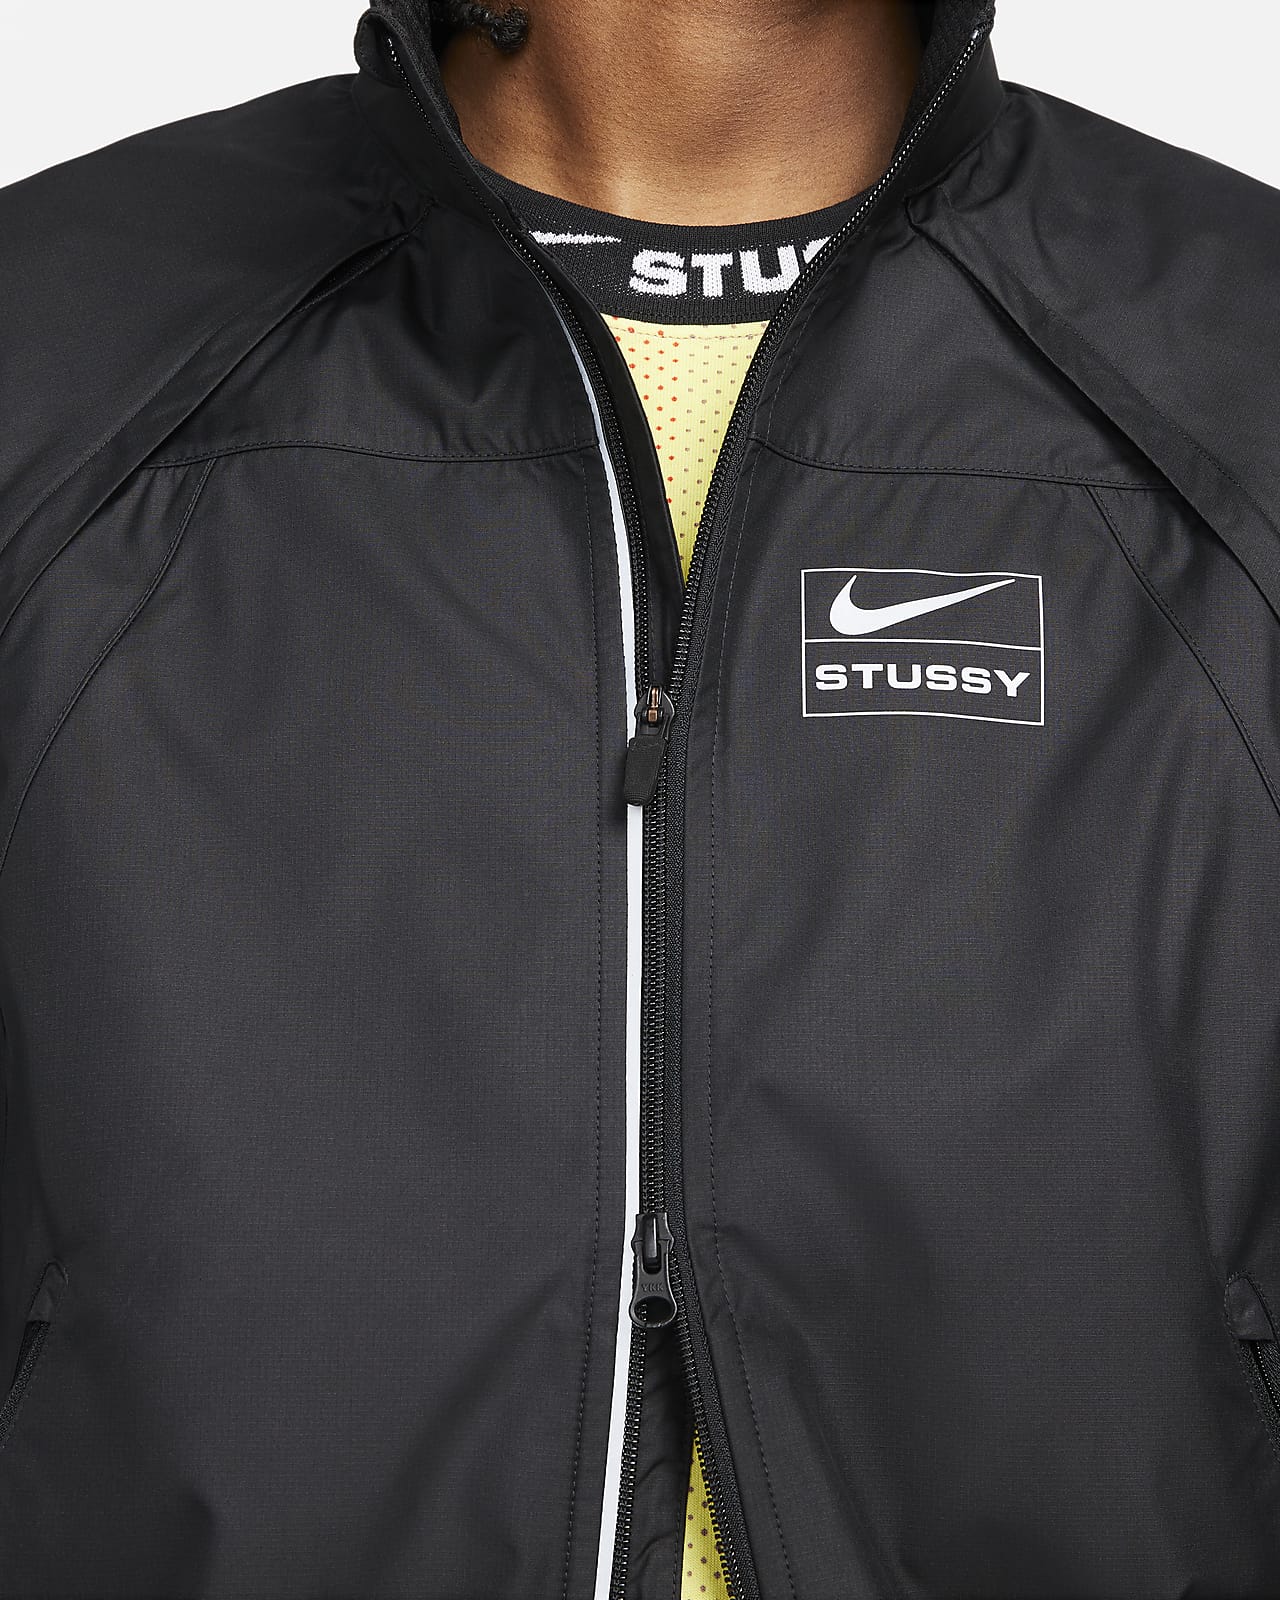 Stussy × Nike Storm-Fit Jacket 